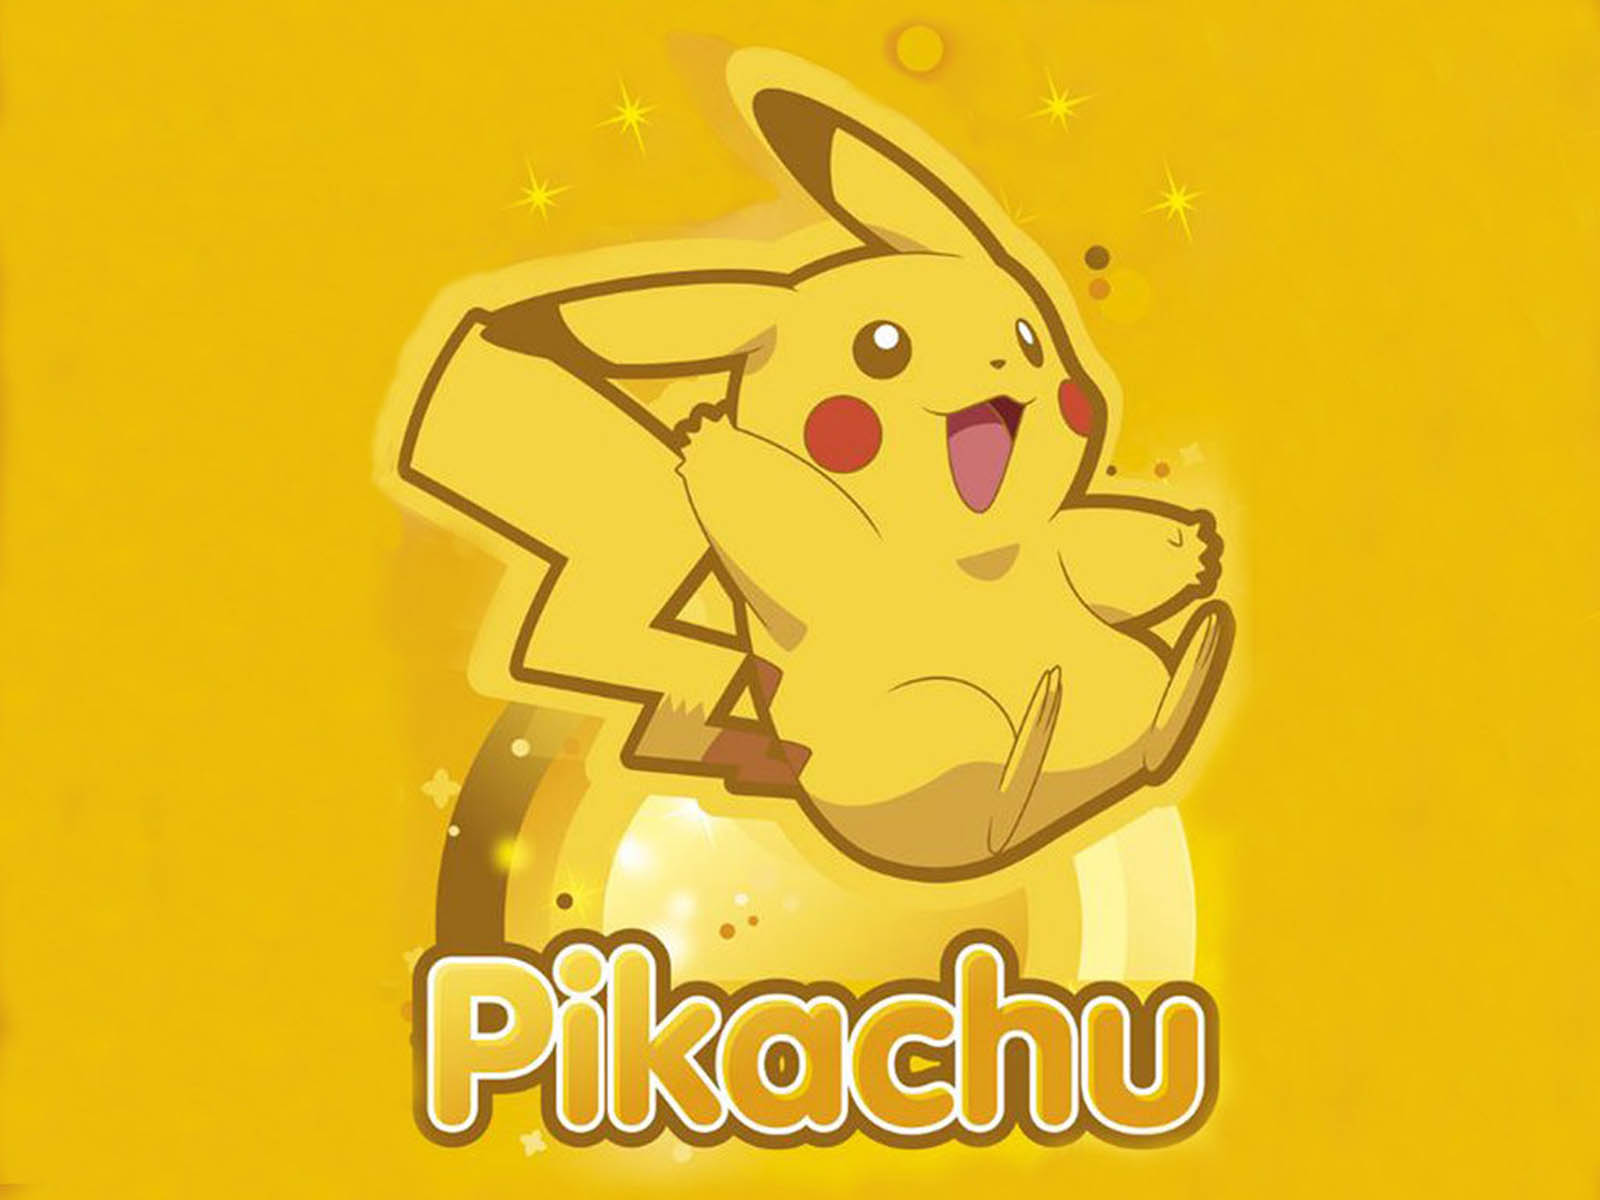 Pikachu Pokemon Picture For Wallpaper